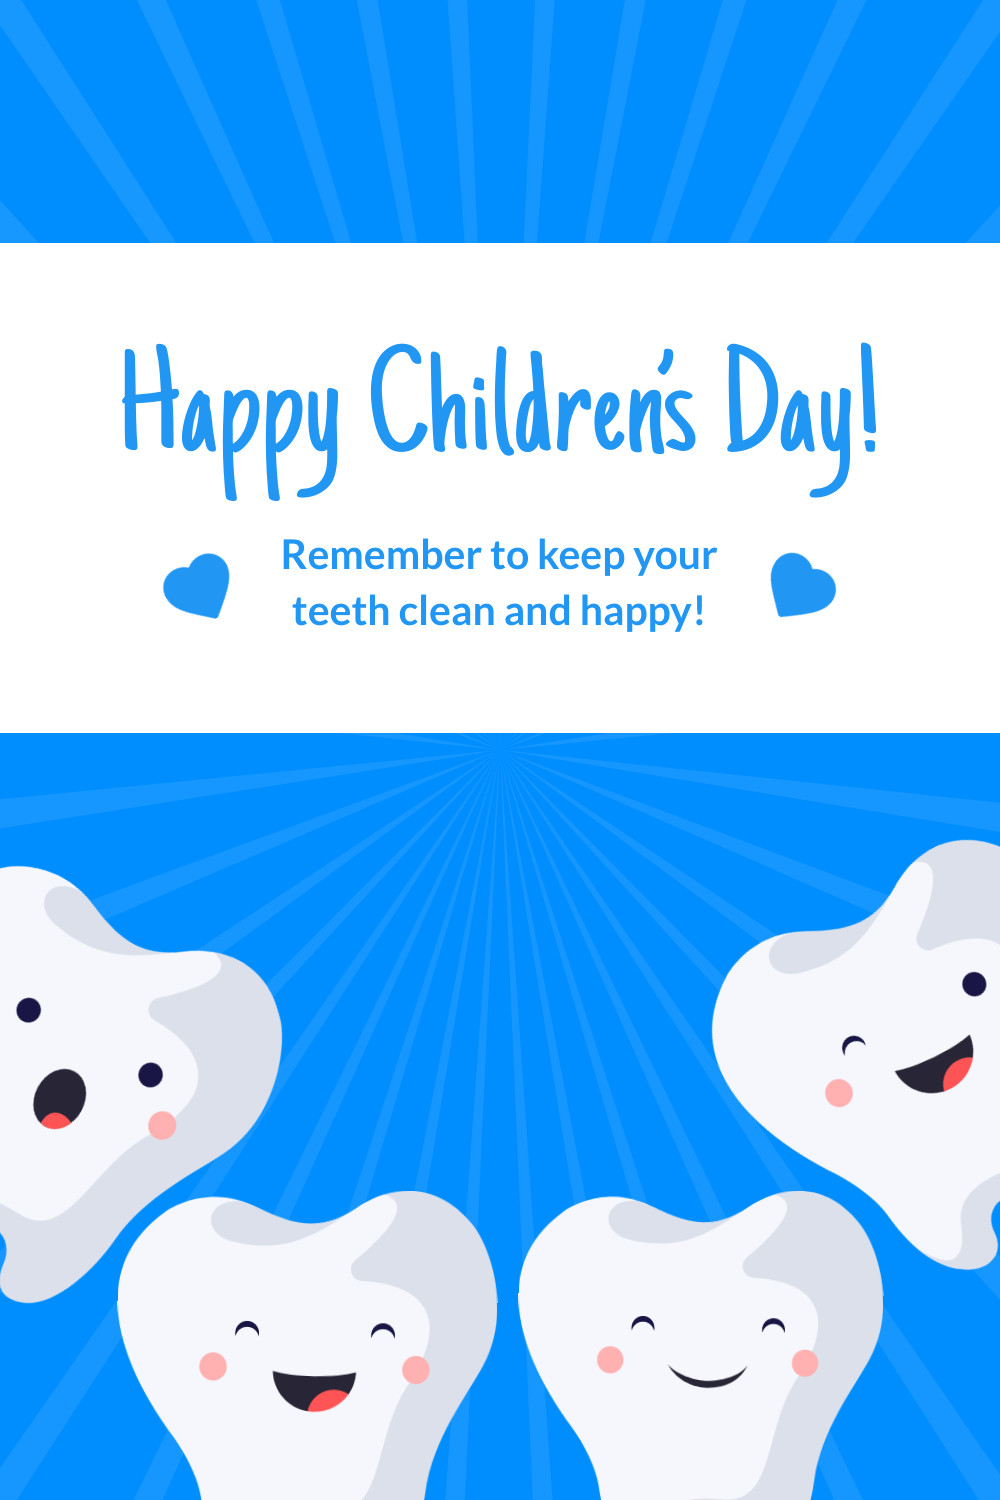 Dental Office Children's Day Facebook Cover 820x360